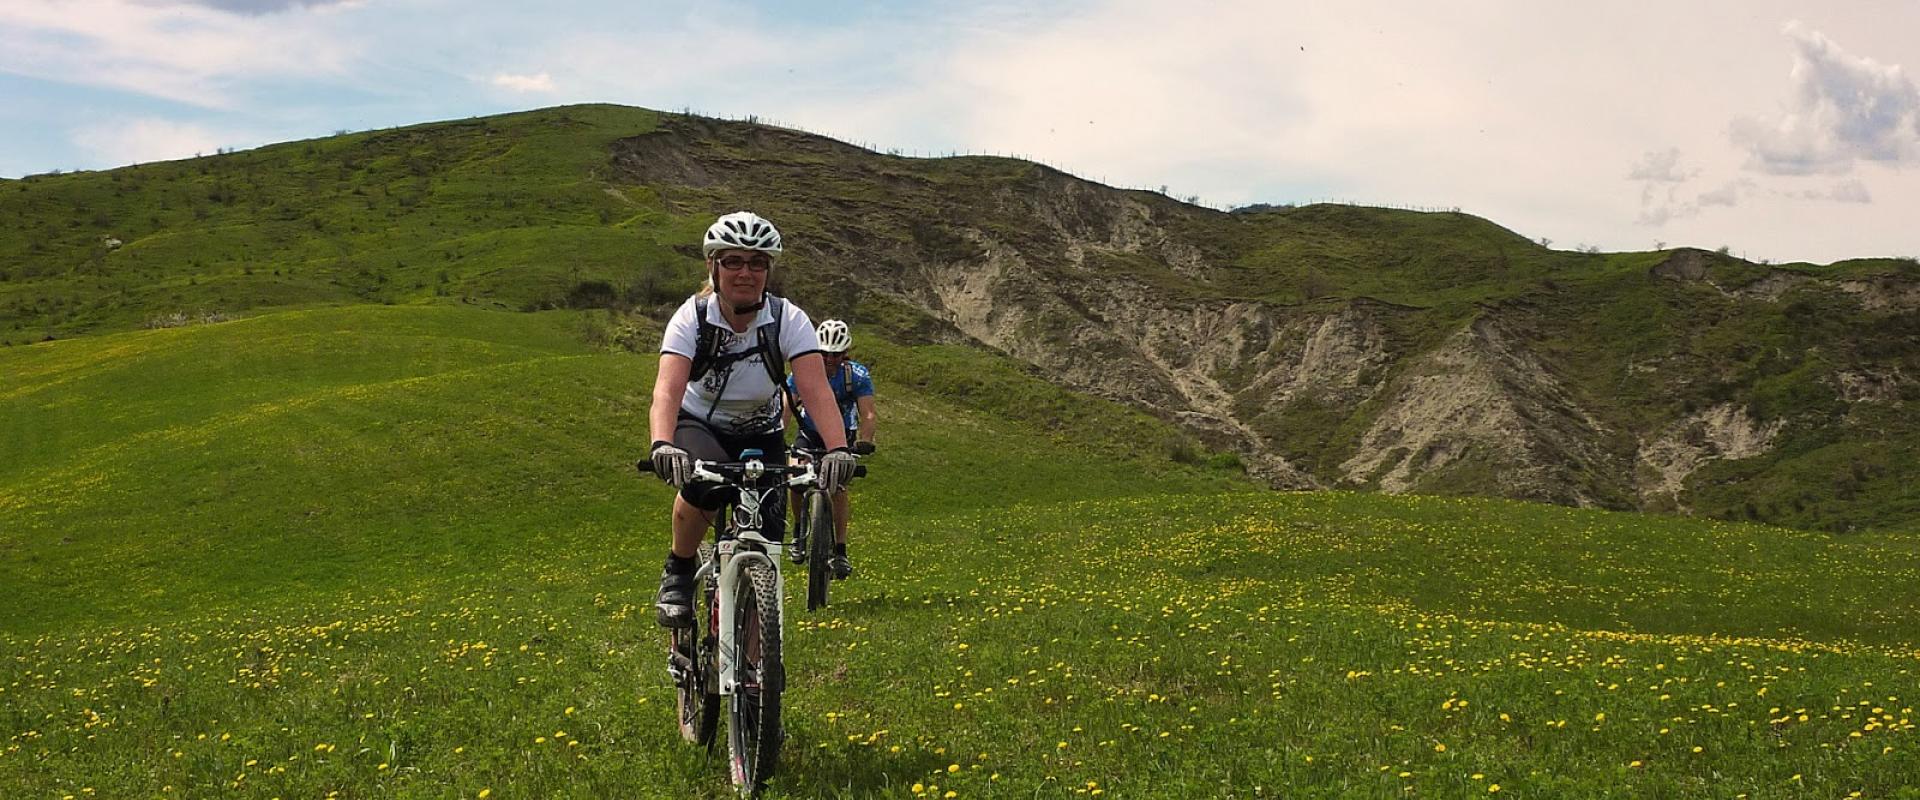 Mountain bike experience in Umbria